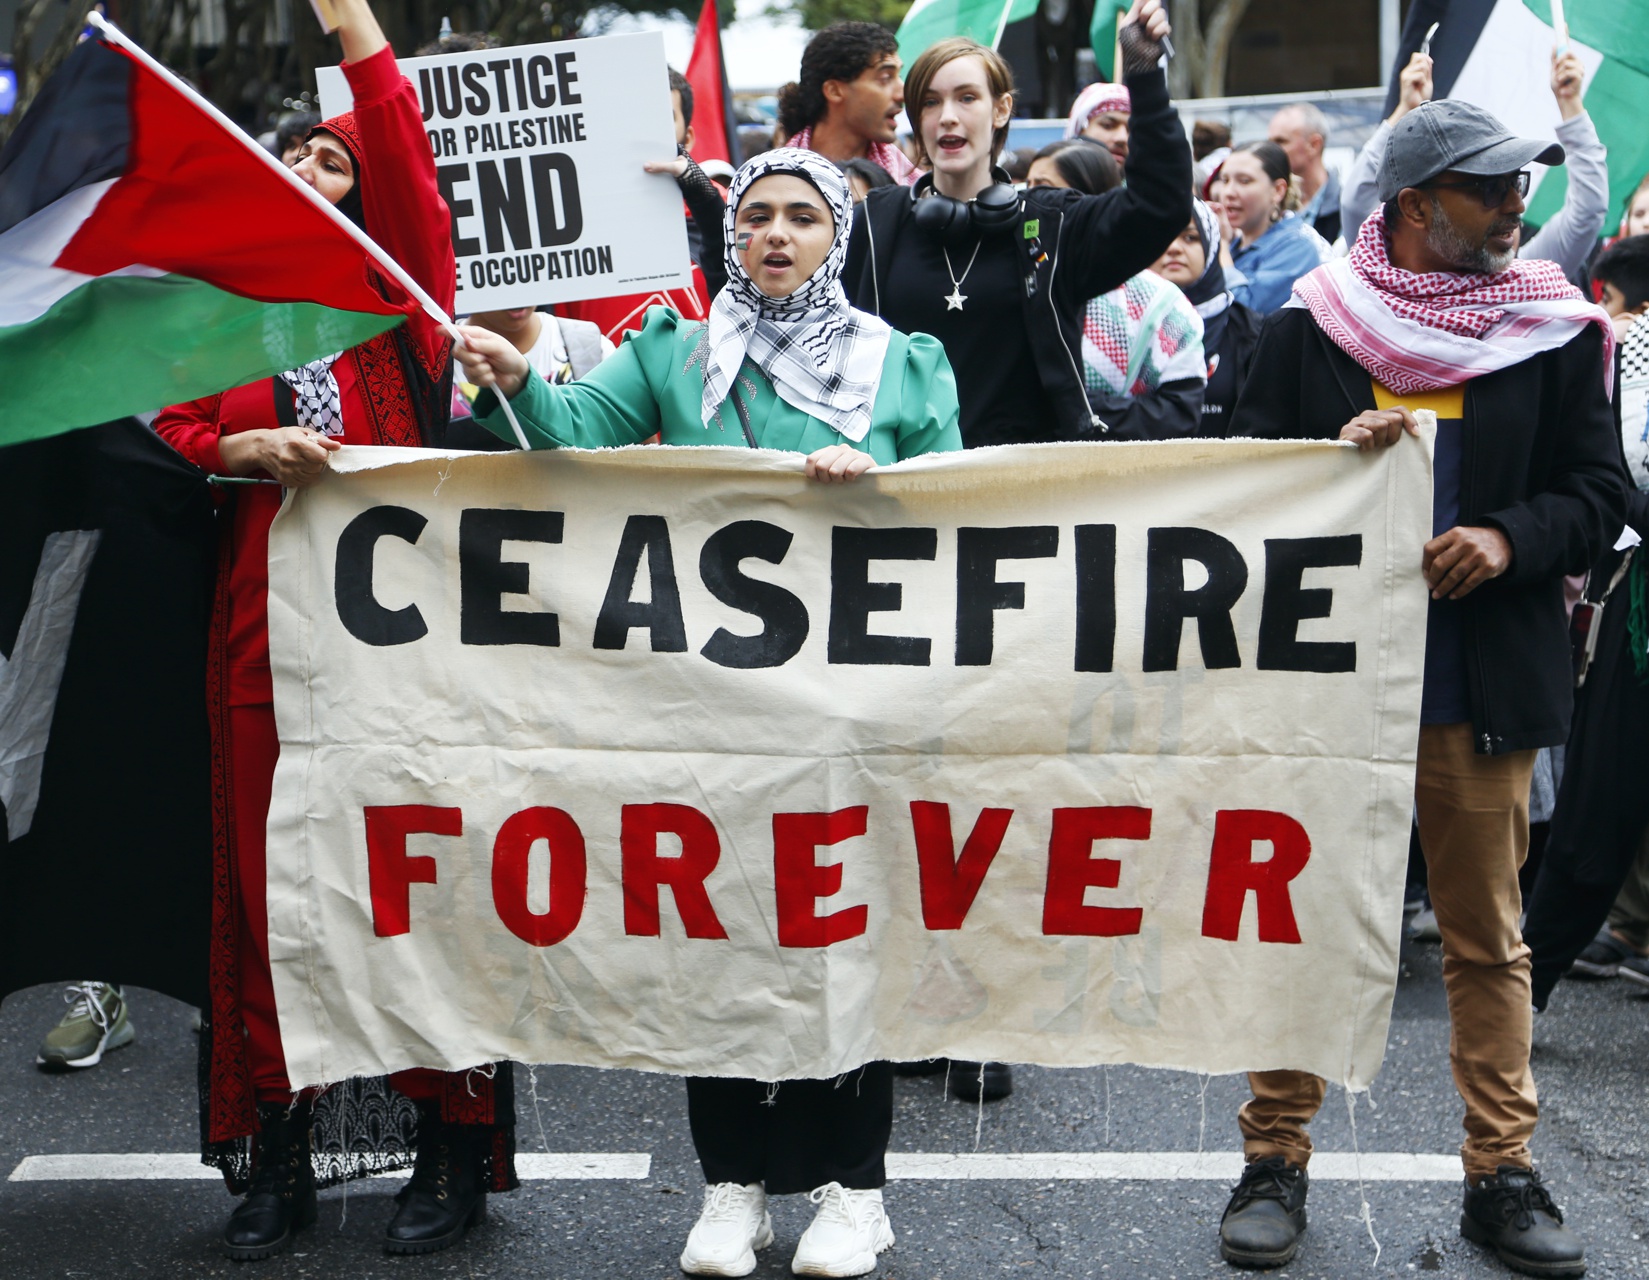 Ceasefire forever, Magan-djin/Brisbane, April 21